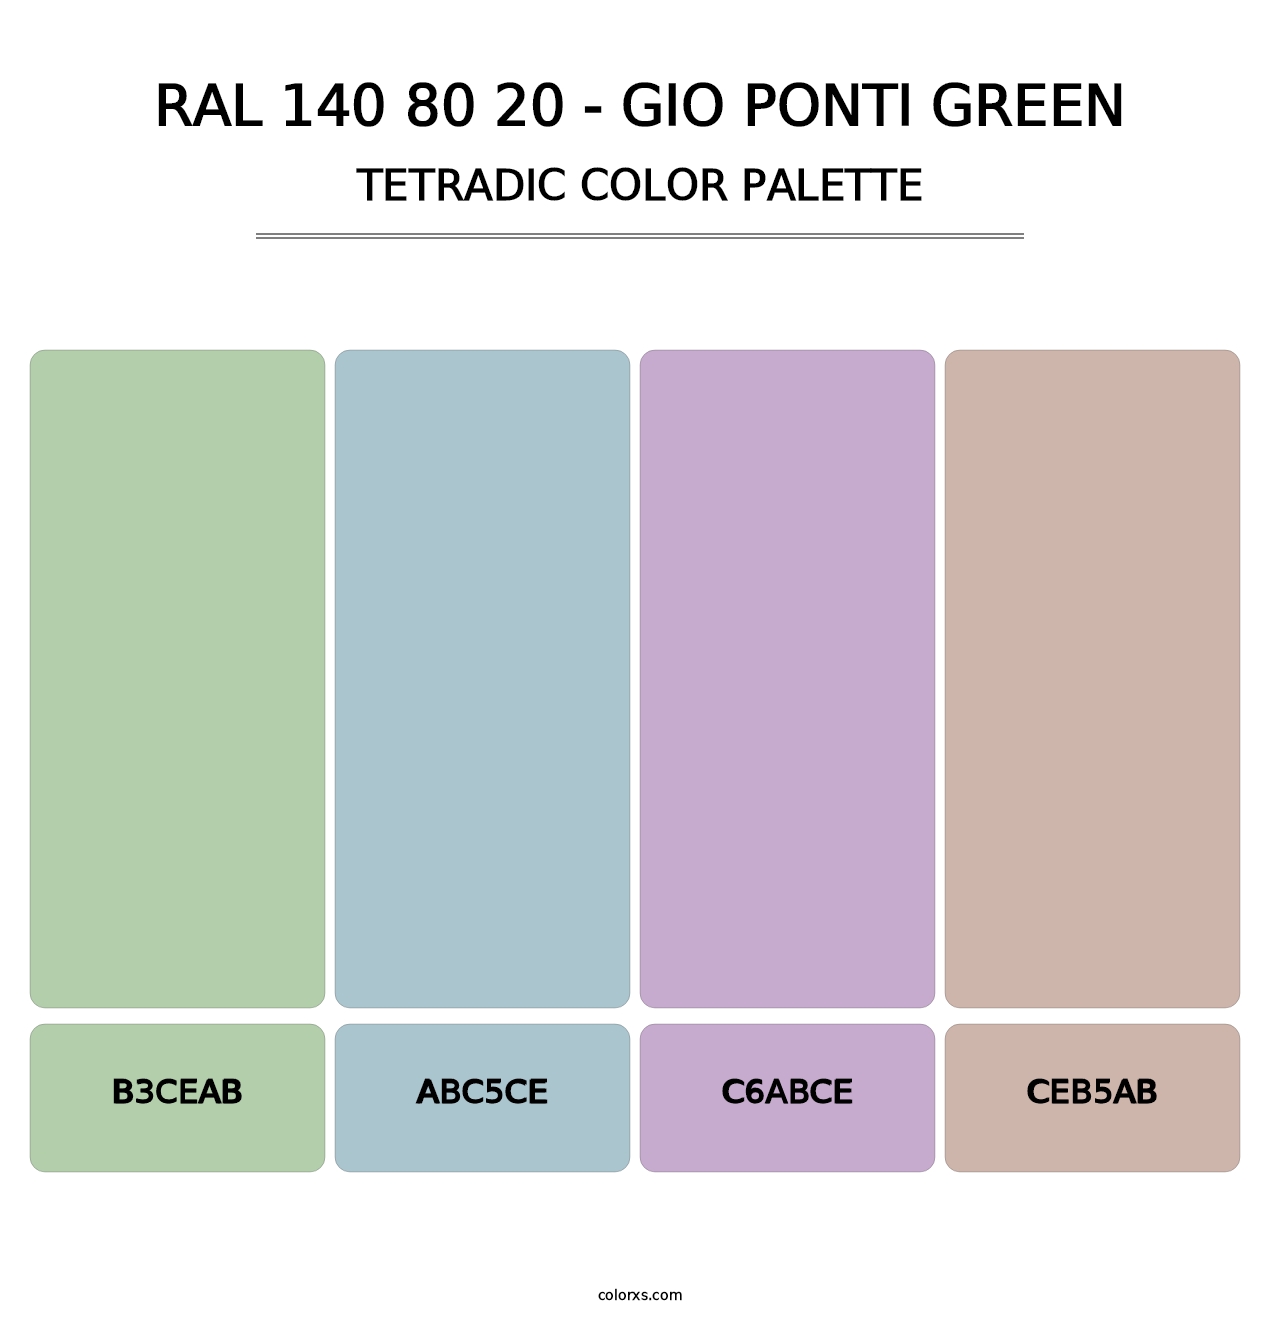 RAL 140 80 20 - Gio Ponti Green - Tetradic Color Palette